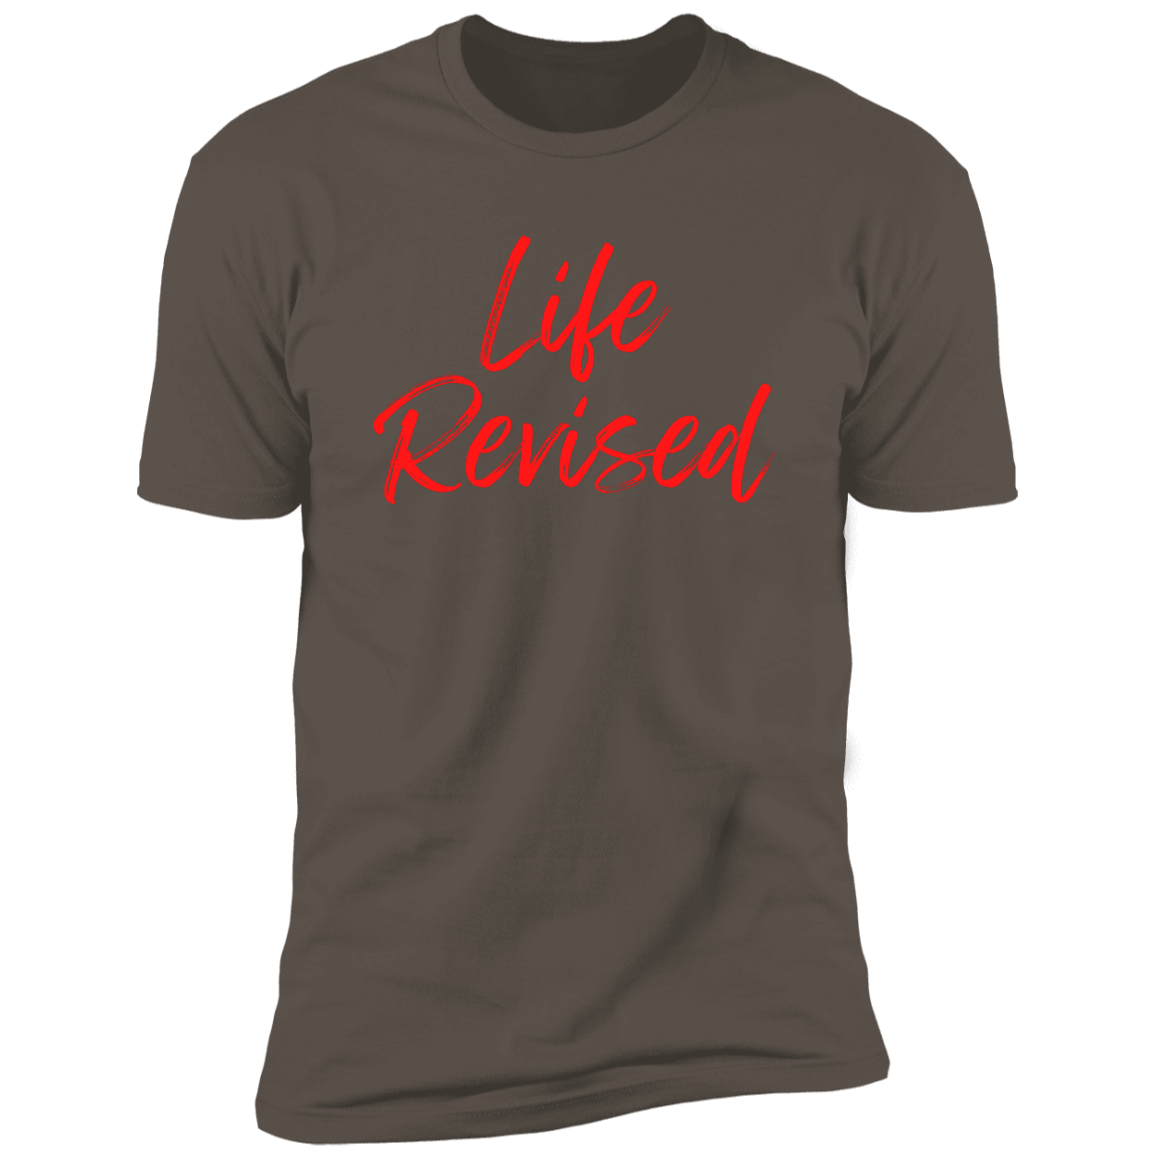 Life Revised Short Sleeve T-Shirt Front & Back